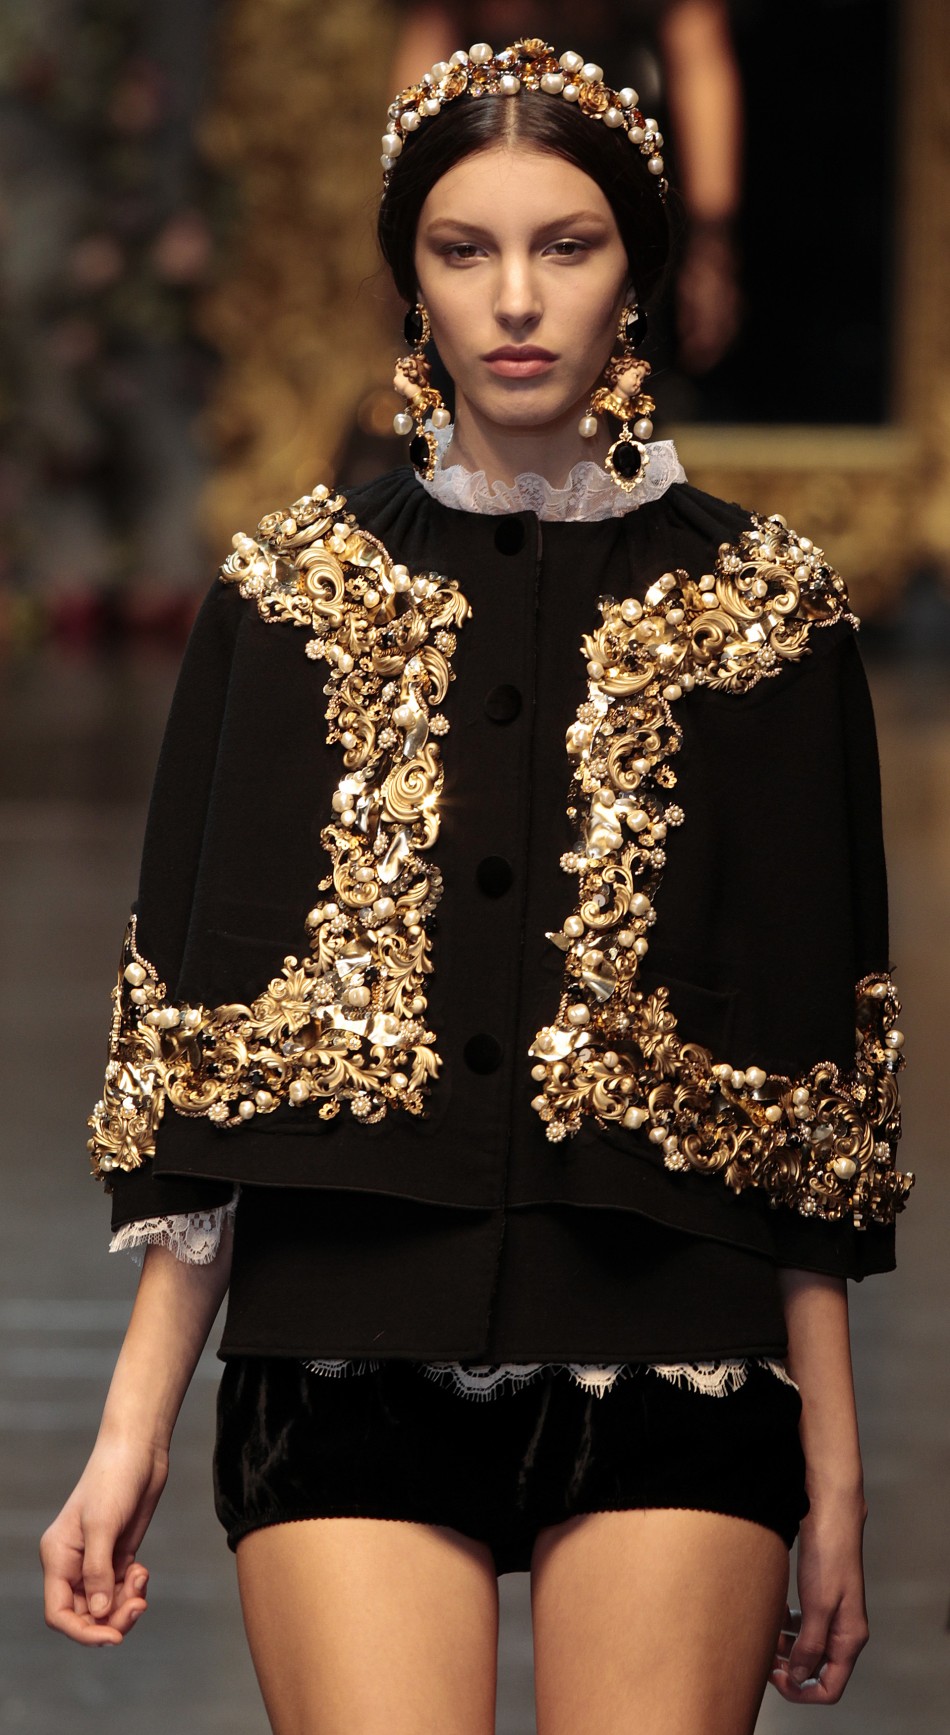 2012 Milan Fashion Week: Dolce & Gabbana’s Baroque Romanticism [SLIDESHOW]